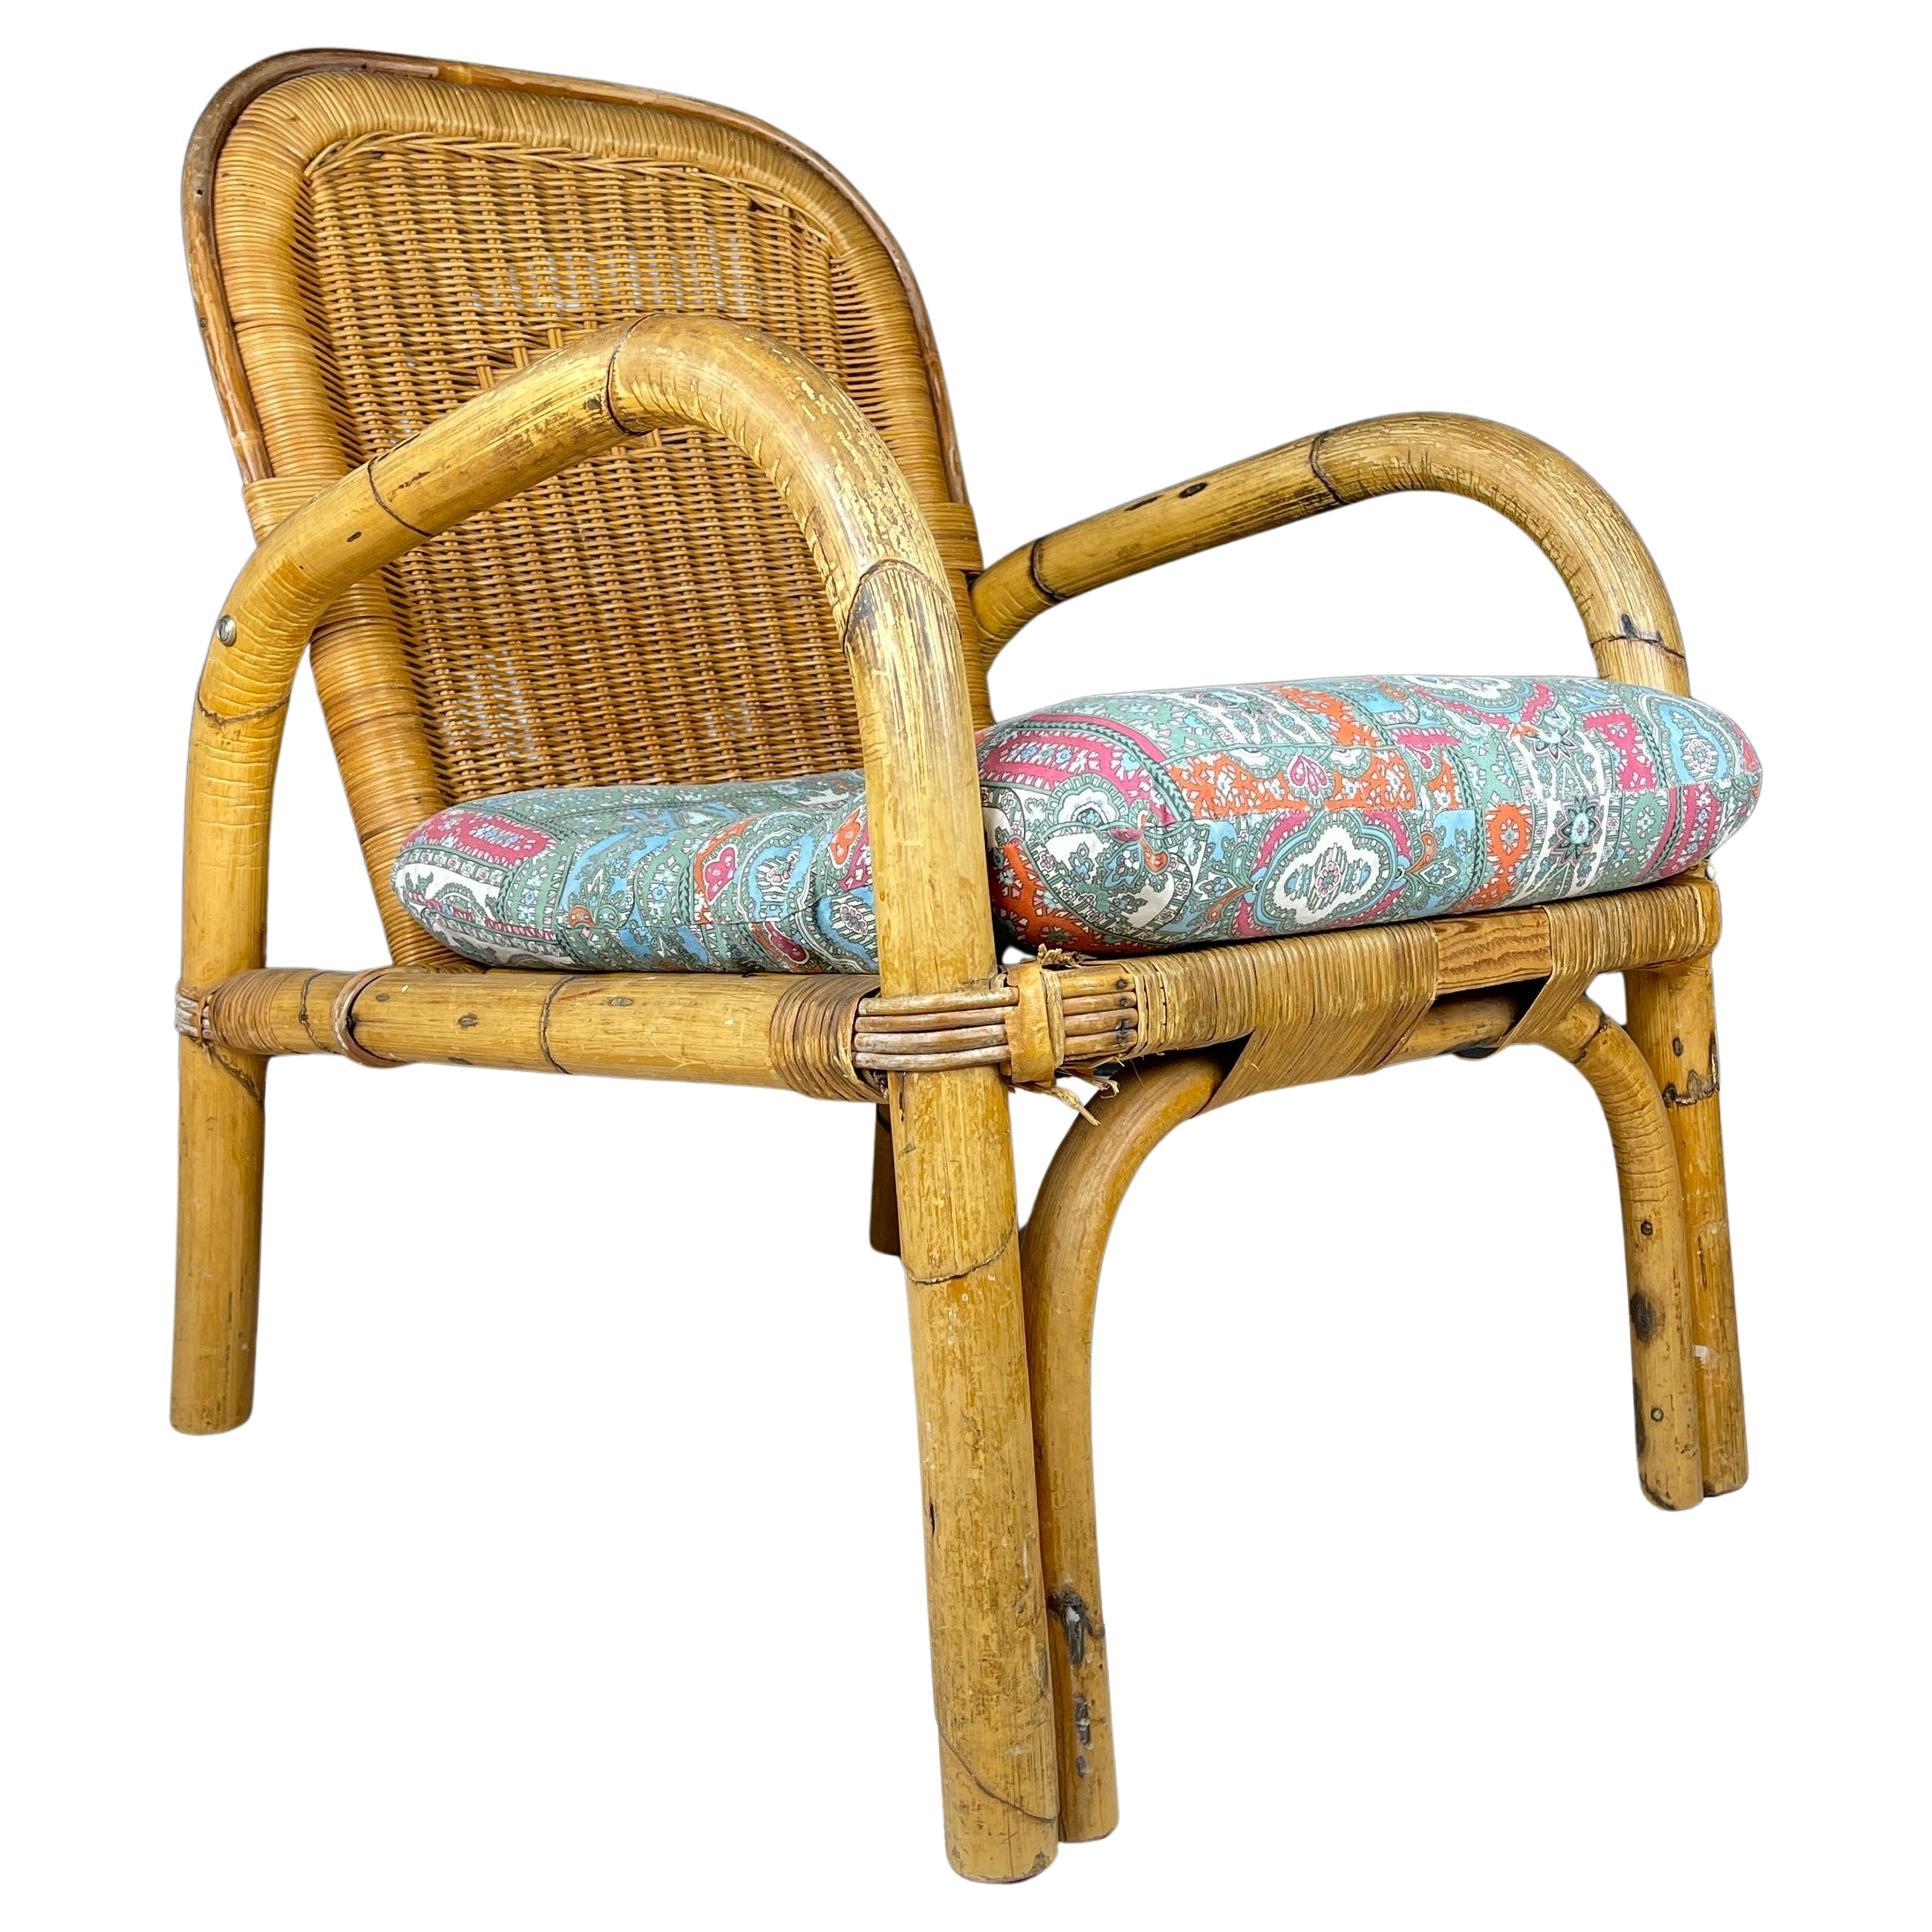 Bamboo armchair Italy 1950s Italian vintage garden furniture  For Sale